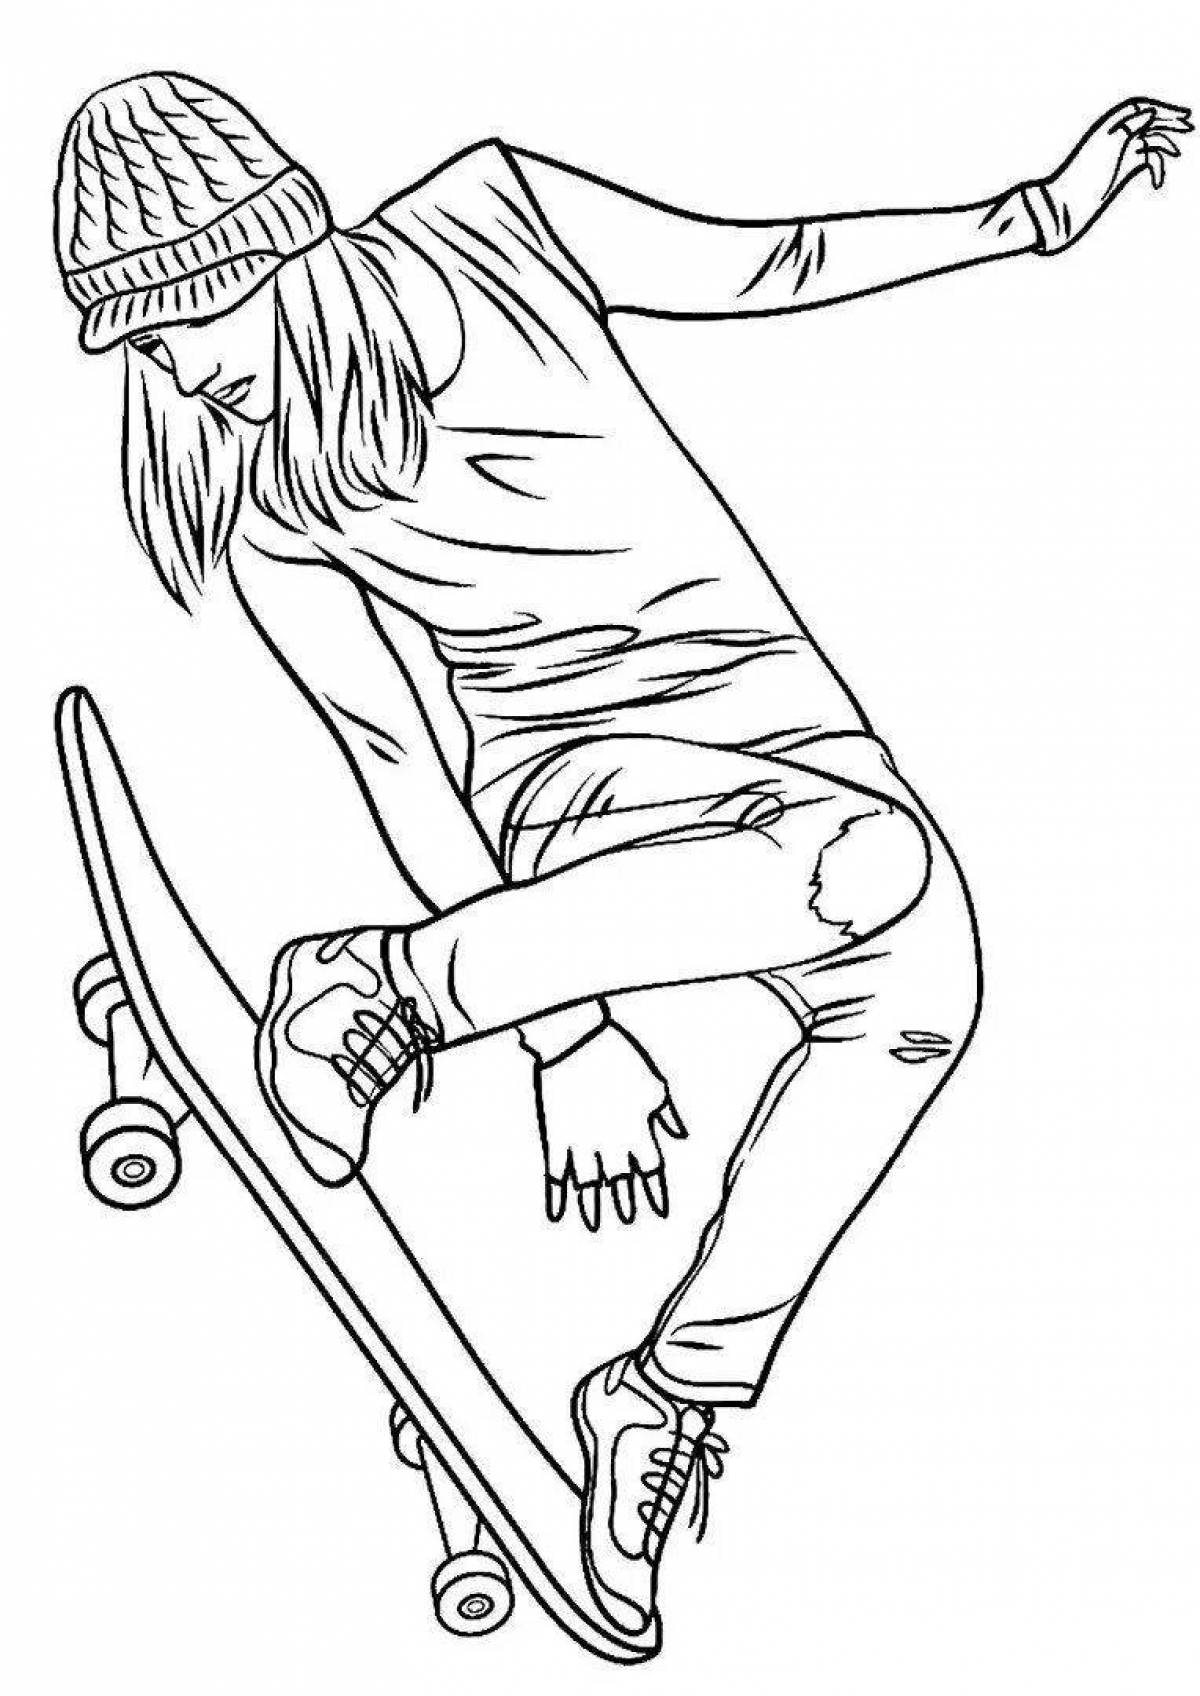 A pretty girl on a skateboard